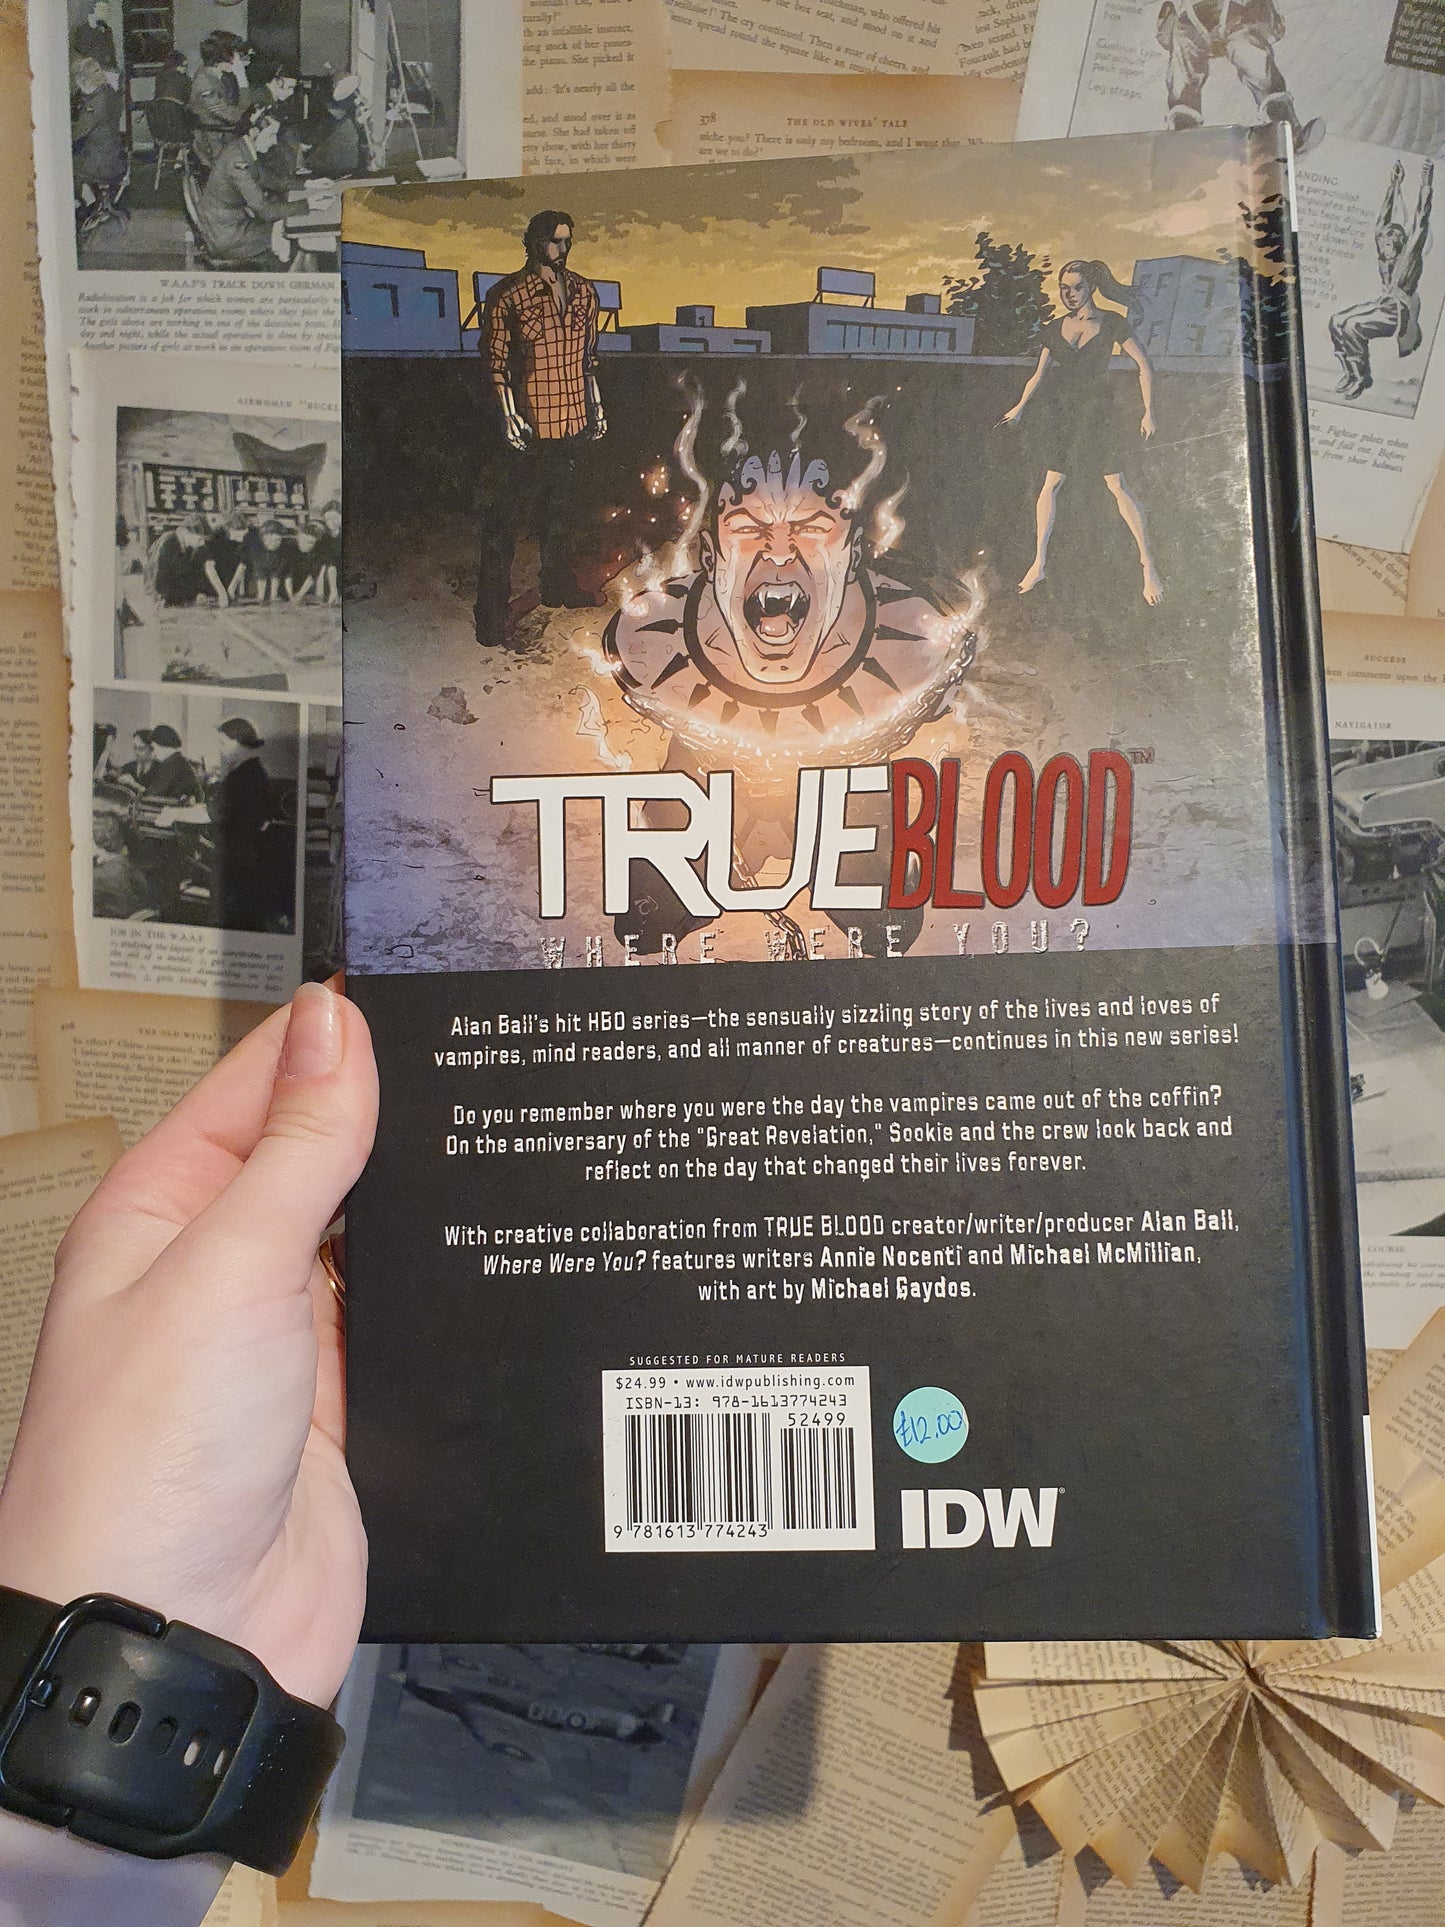 True Blood Vol 4: Where Were You? by McMillian & Nocenti (2012)